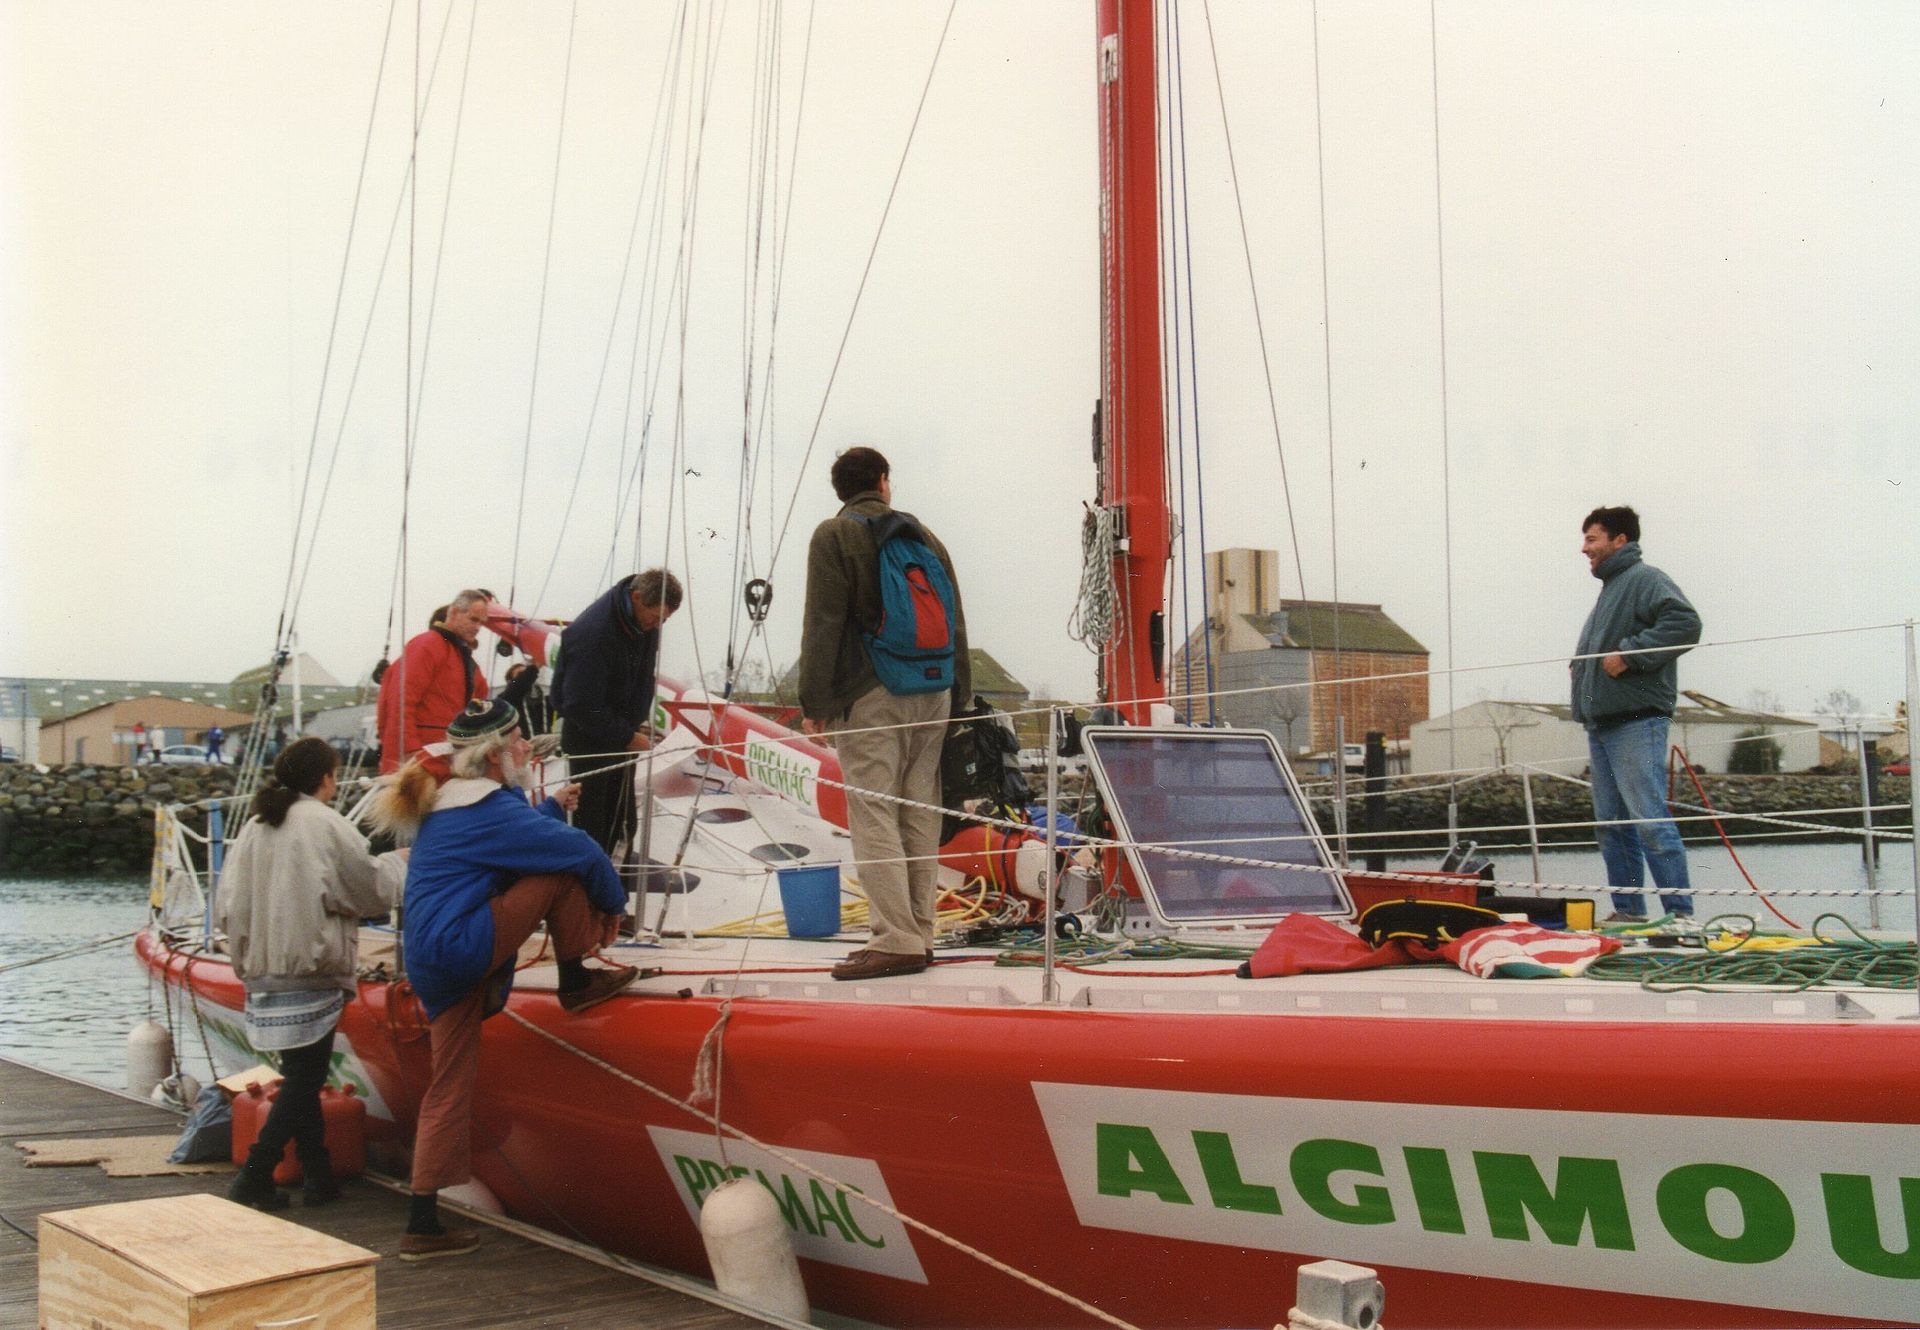 Algimouss_departing_from_Vendée_Globe_1996-1997